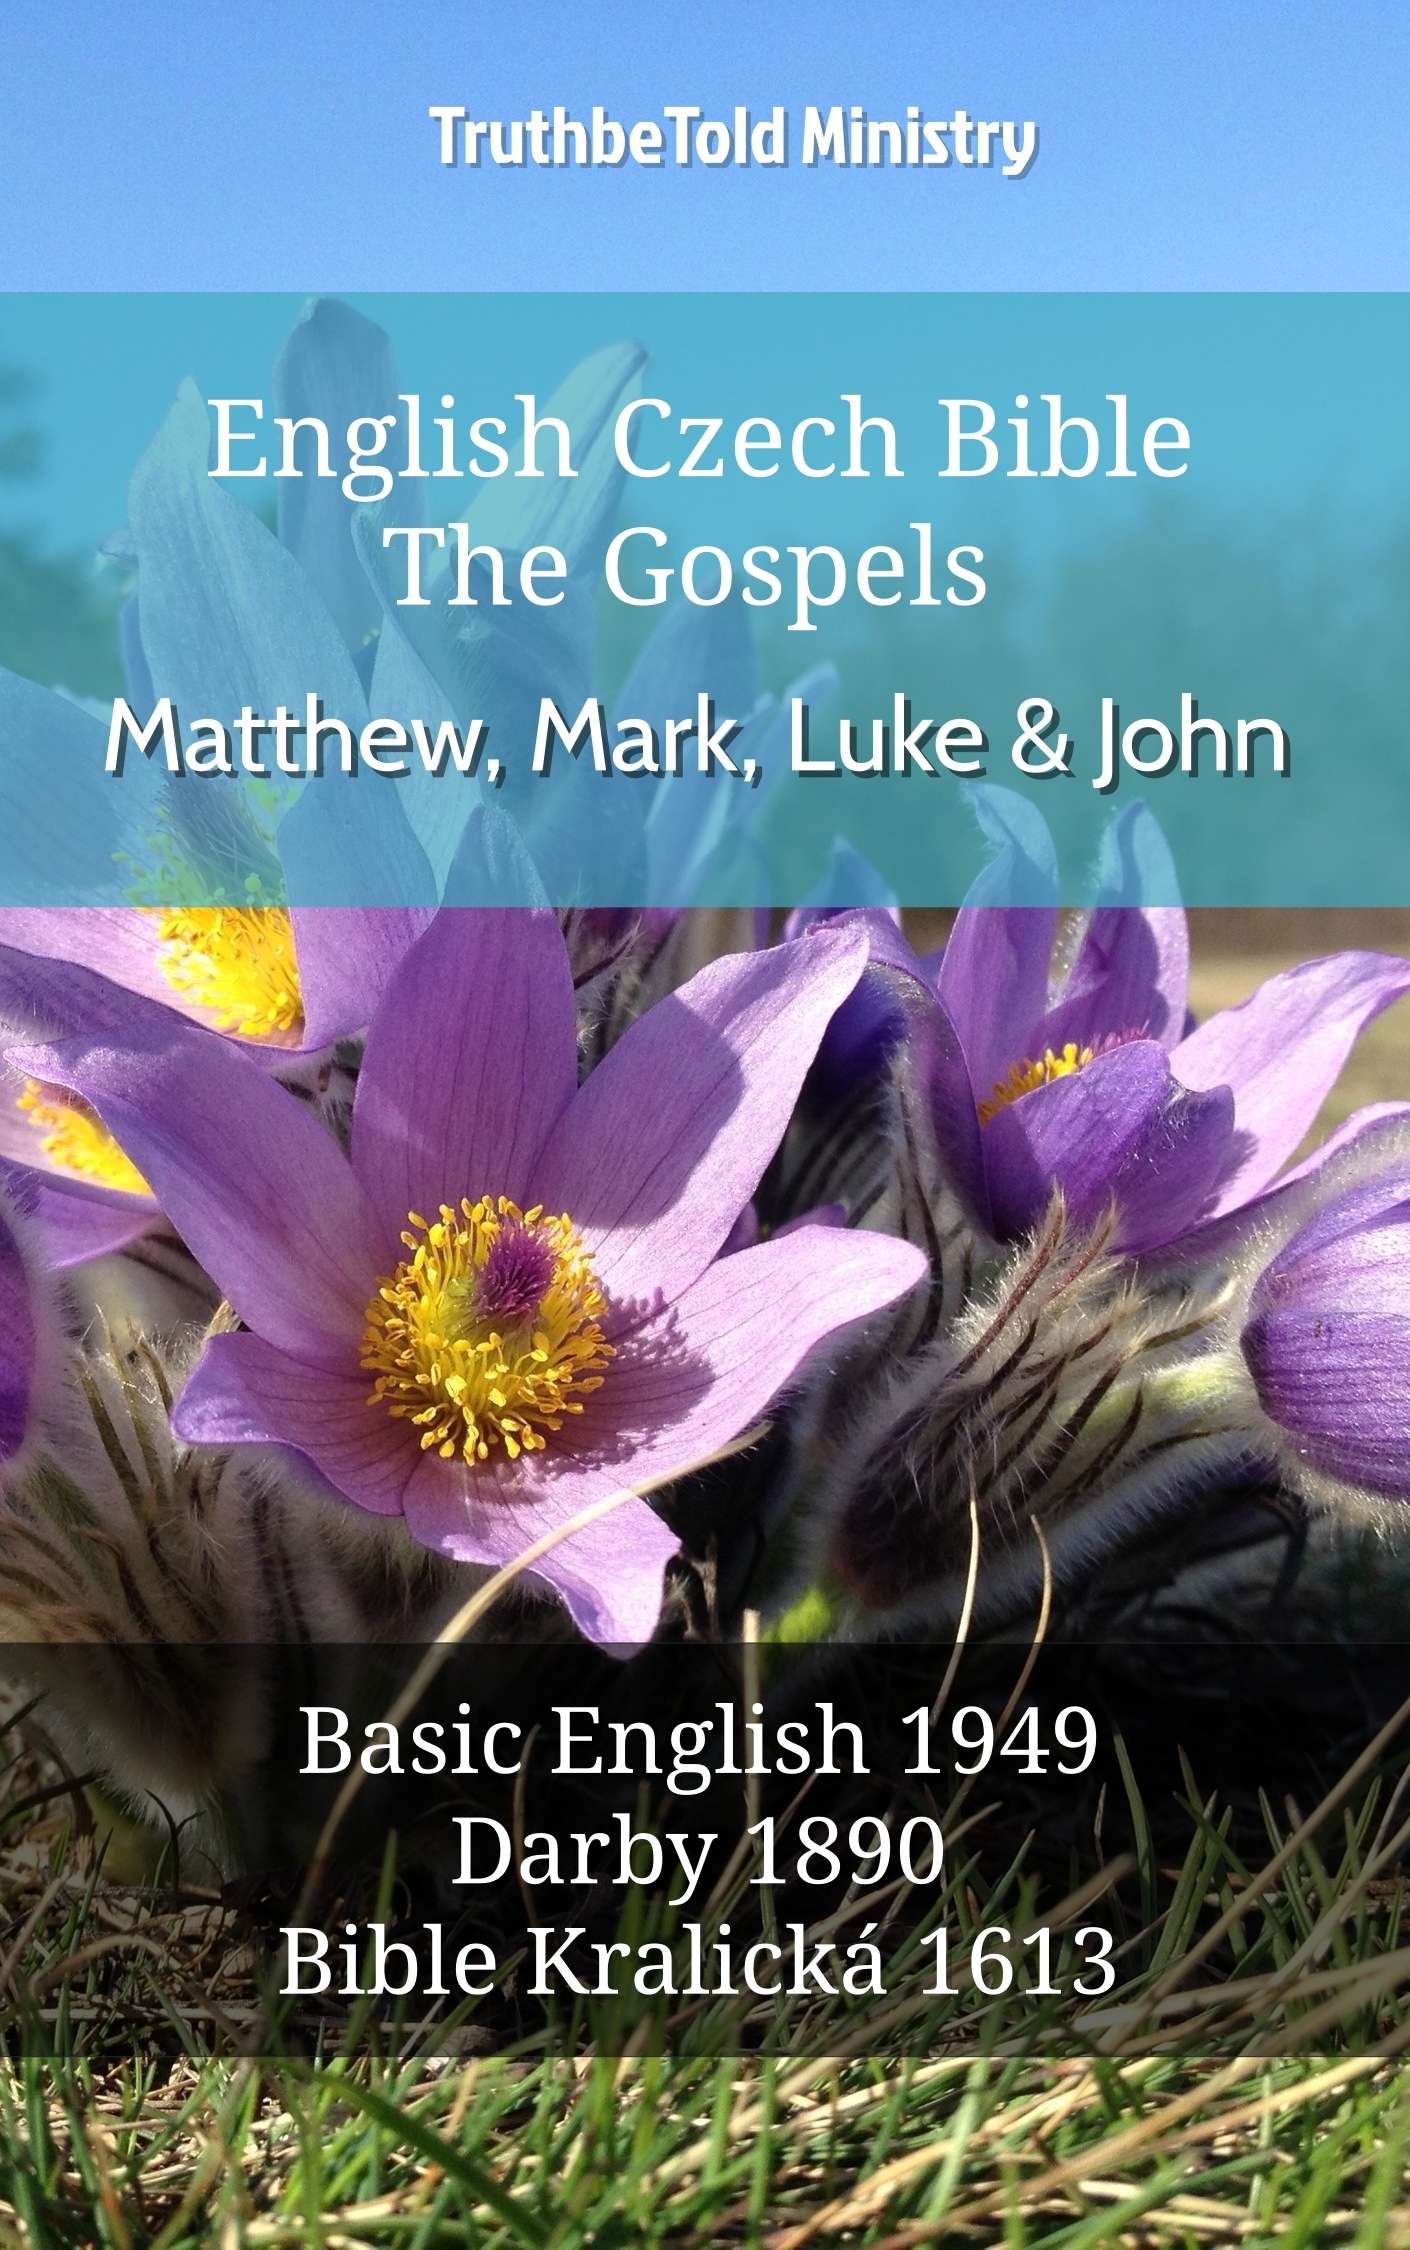 English Czech Bible - The Gospels - Matthew, Mark, Luke and John